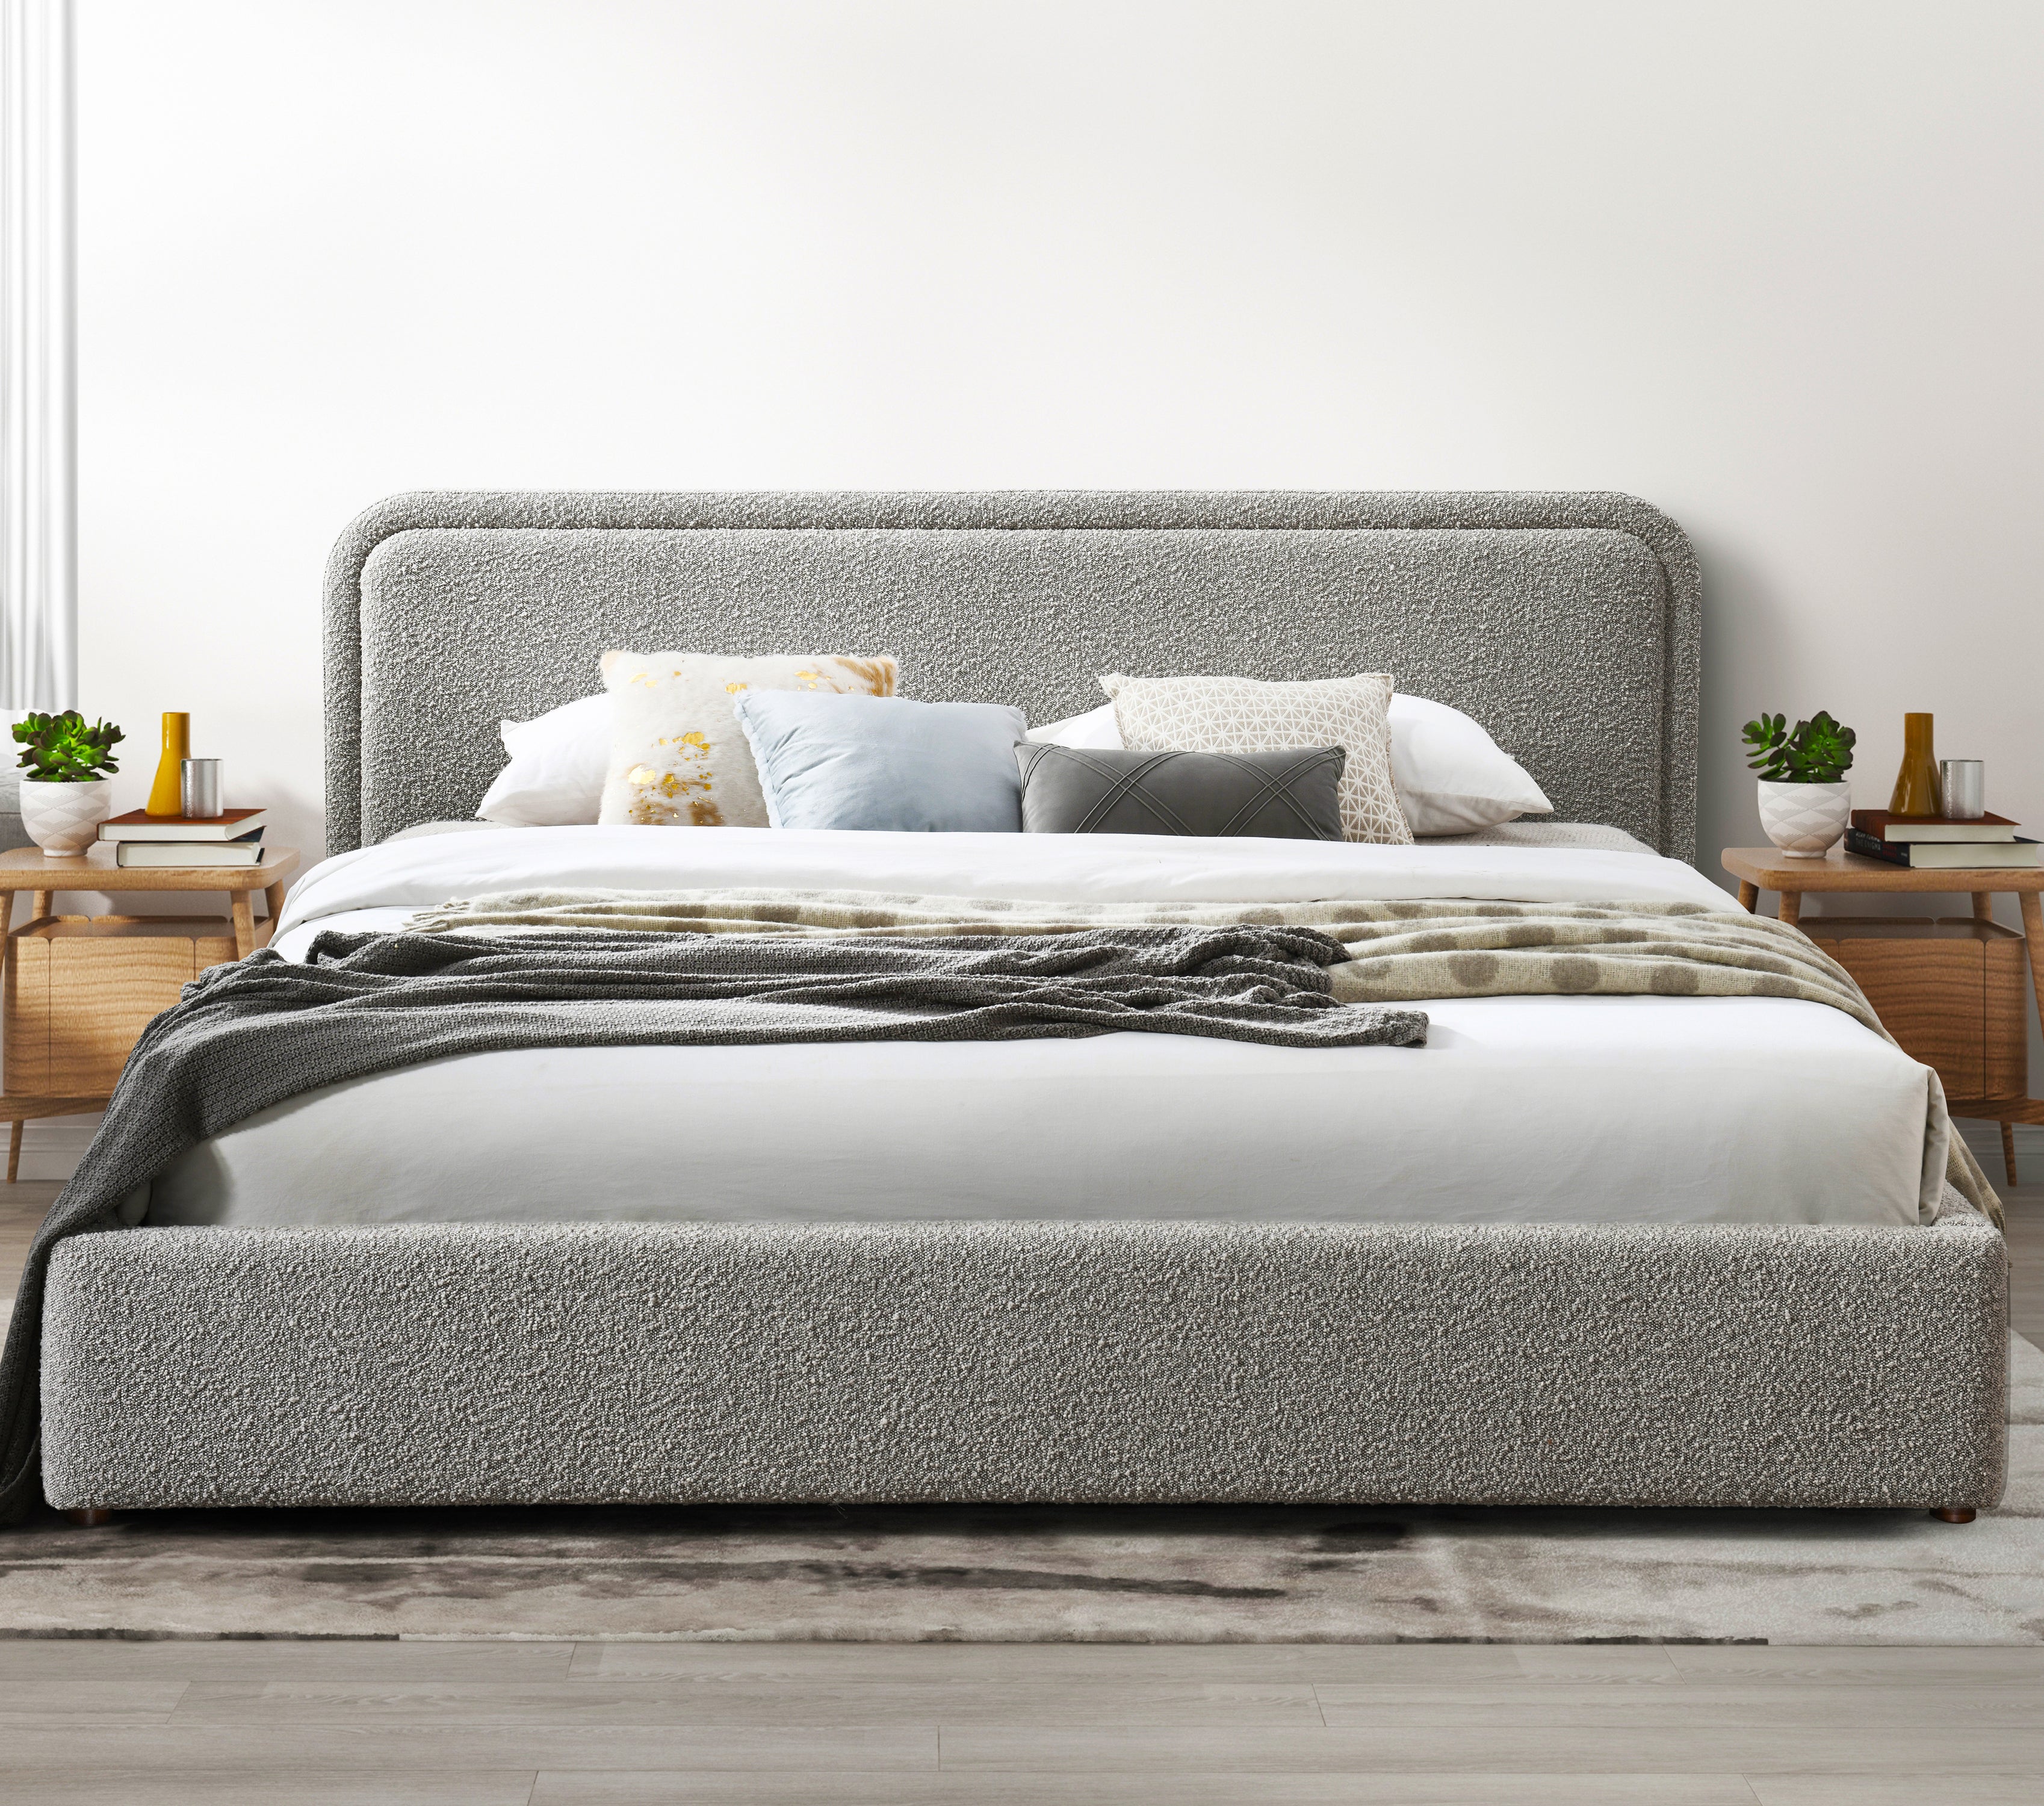 Chloe Upholstered Platform King Bed, Gray Boucle Fabric